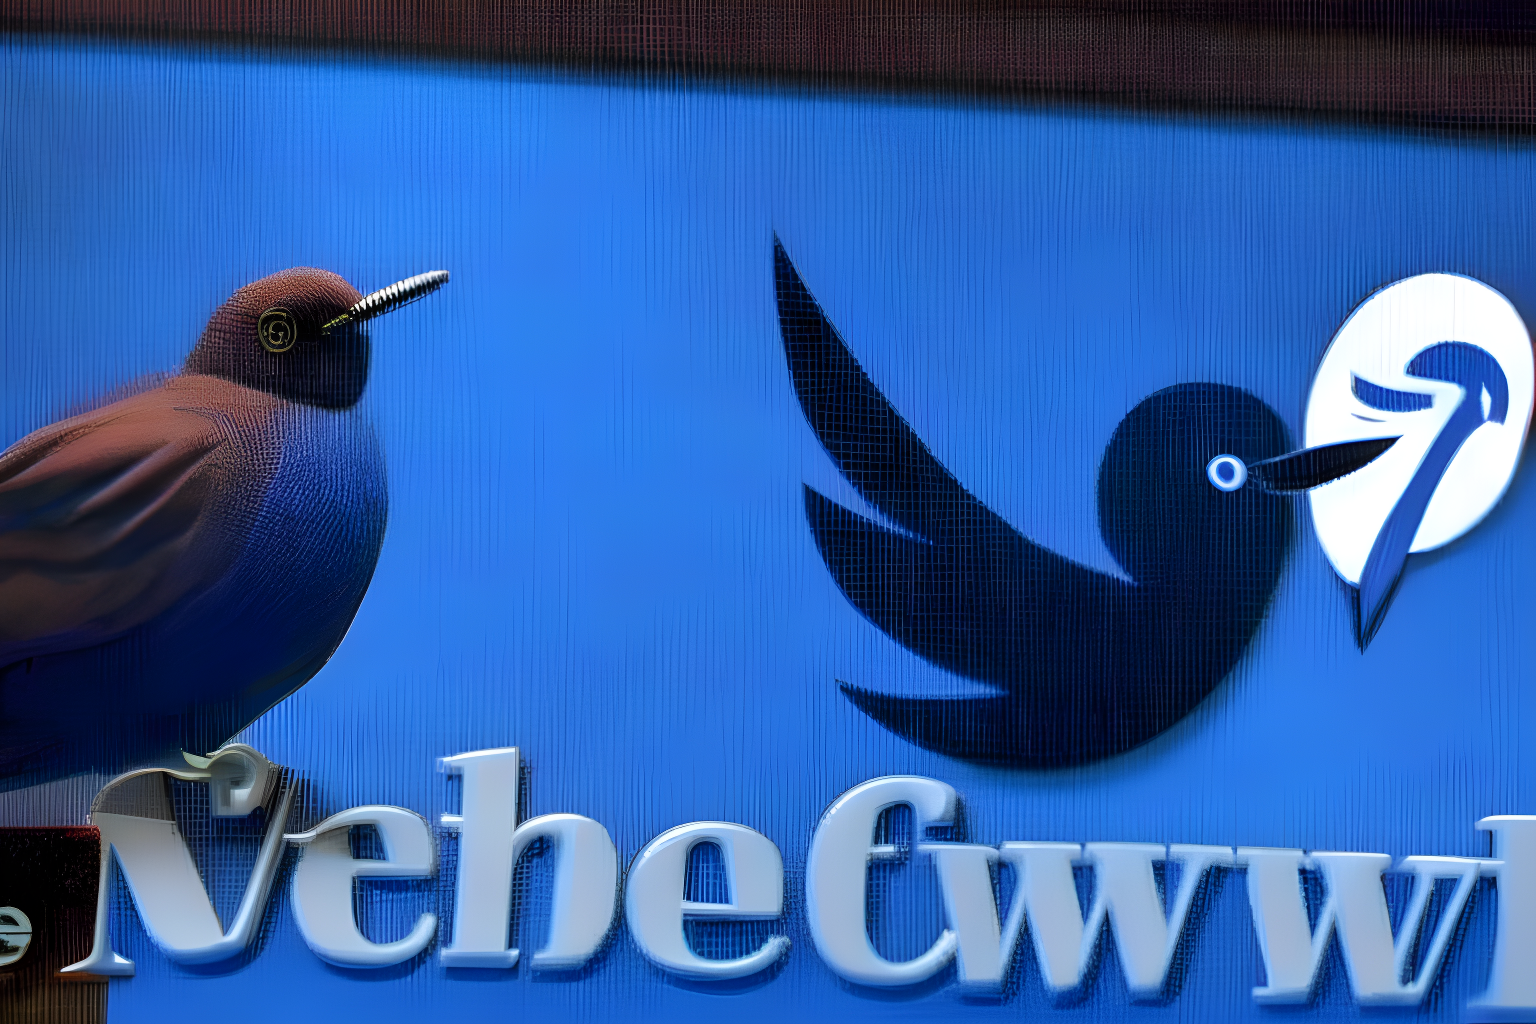 US Judge overseeing lawsuit involving Twitter